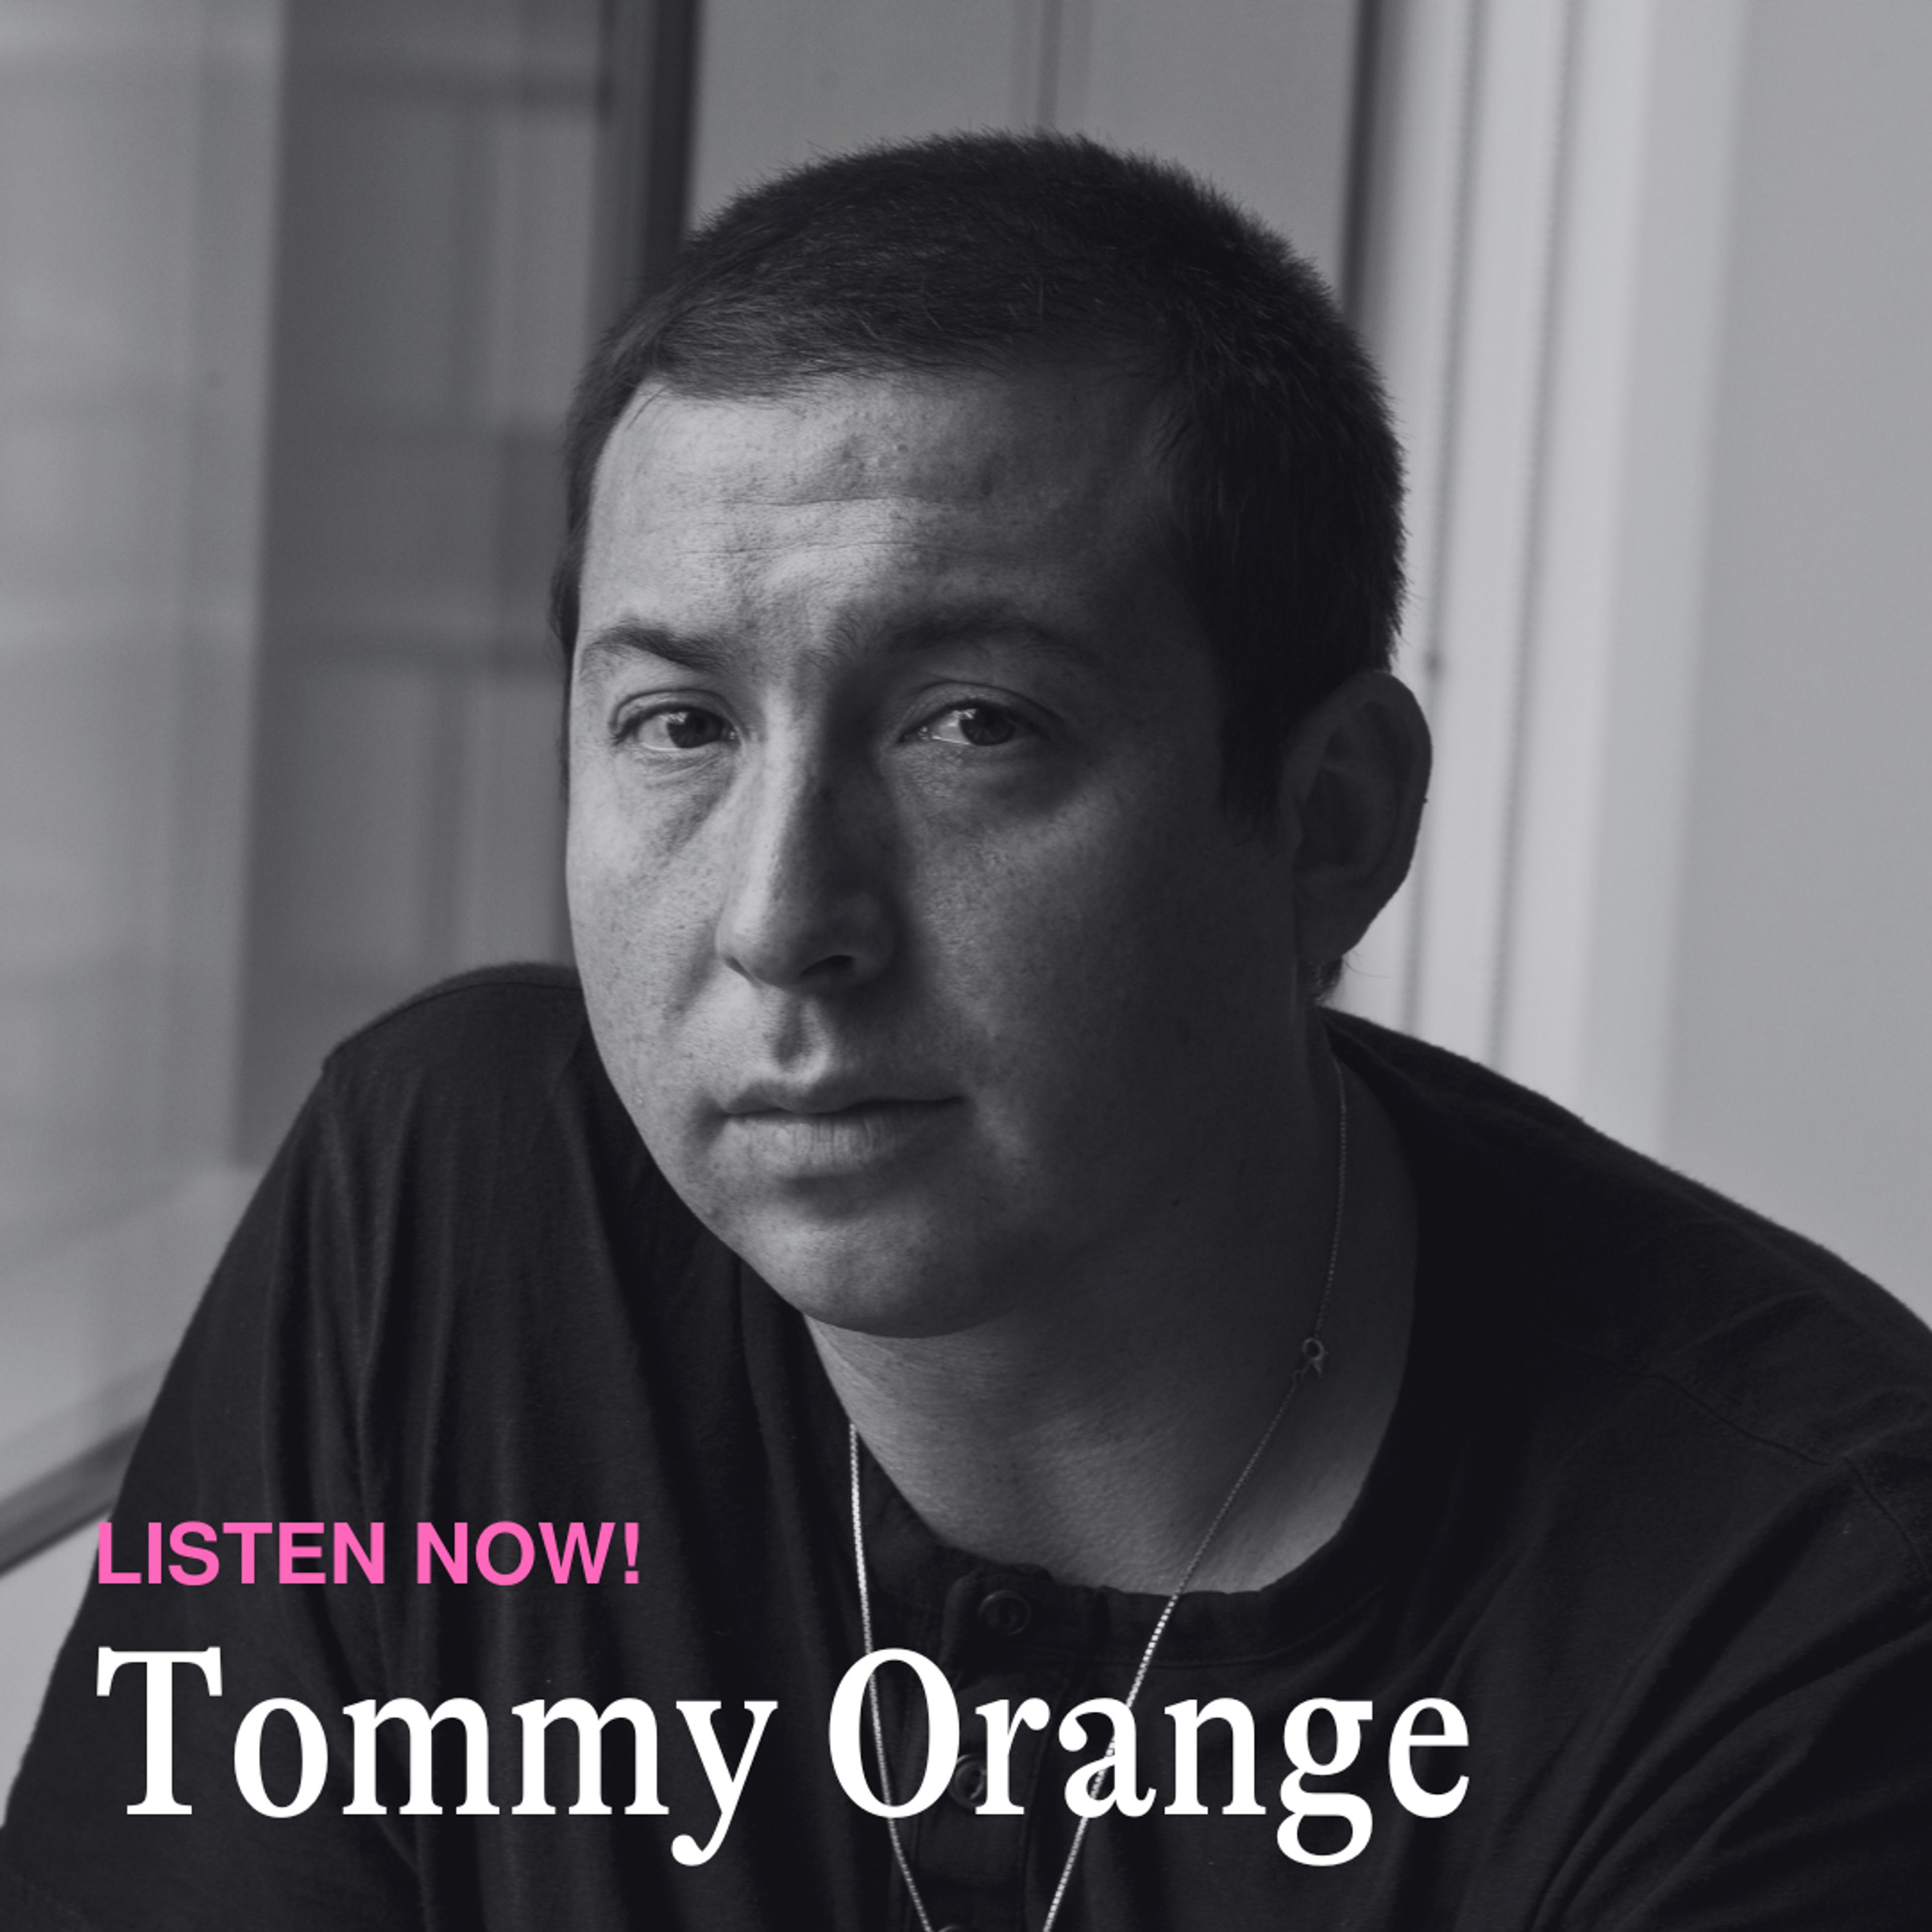 Tommy Orange’s “Wandering Stars”